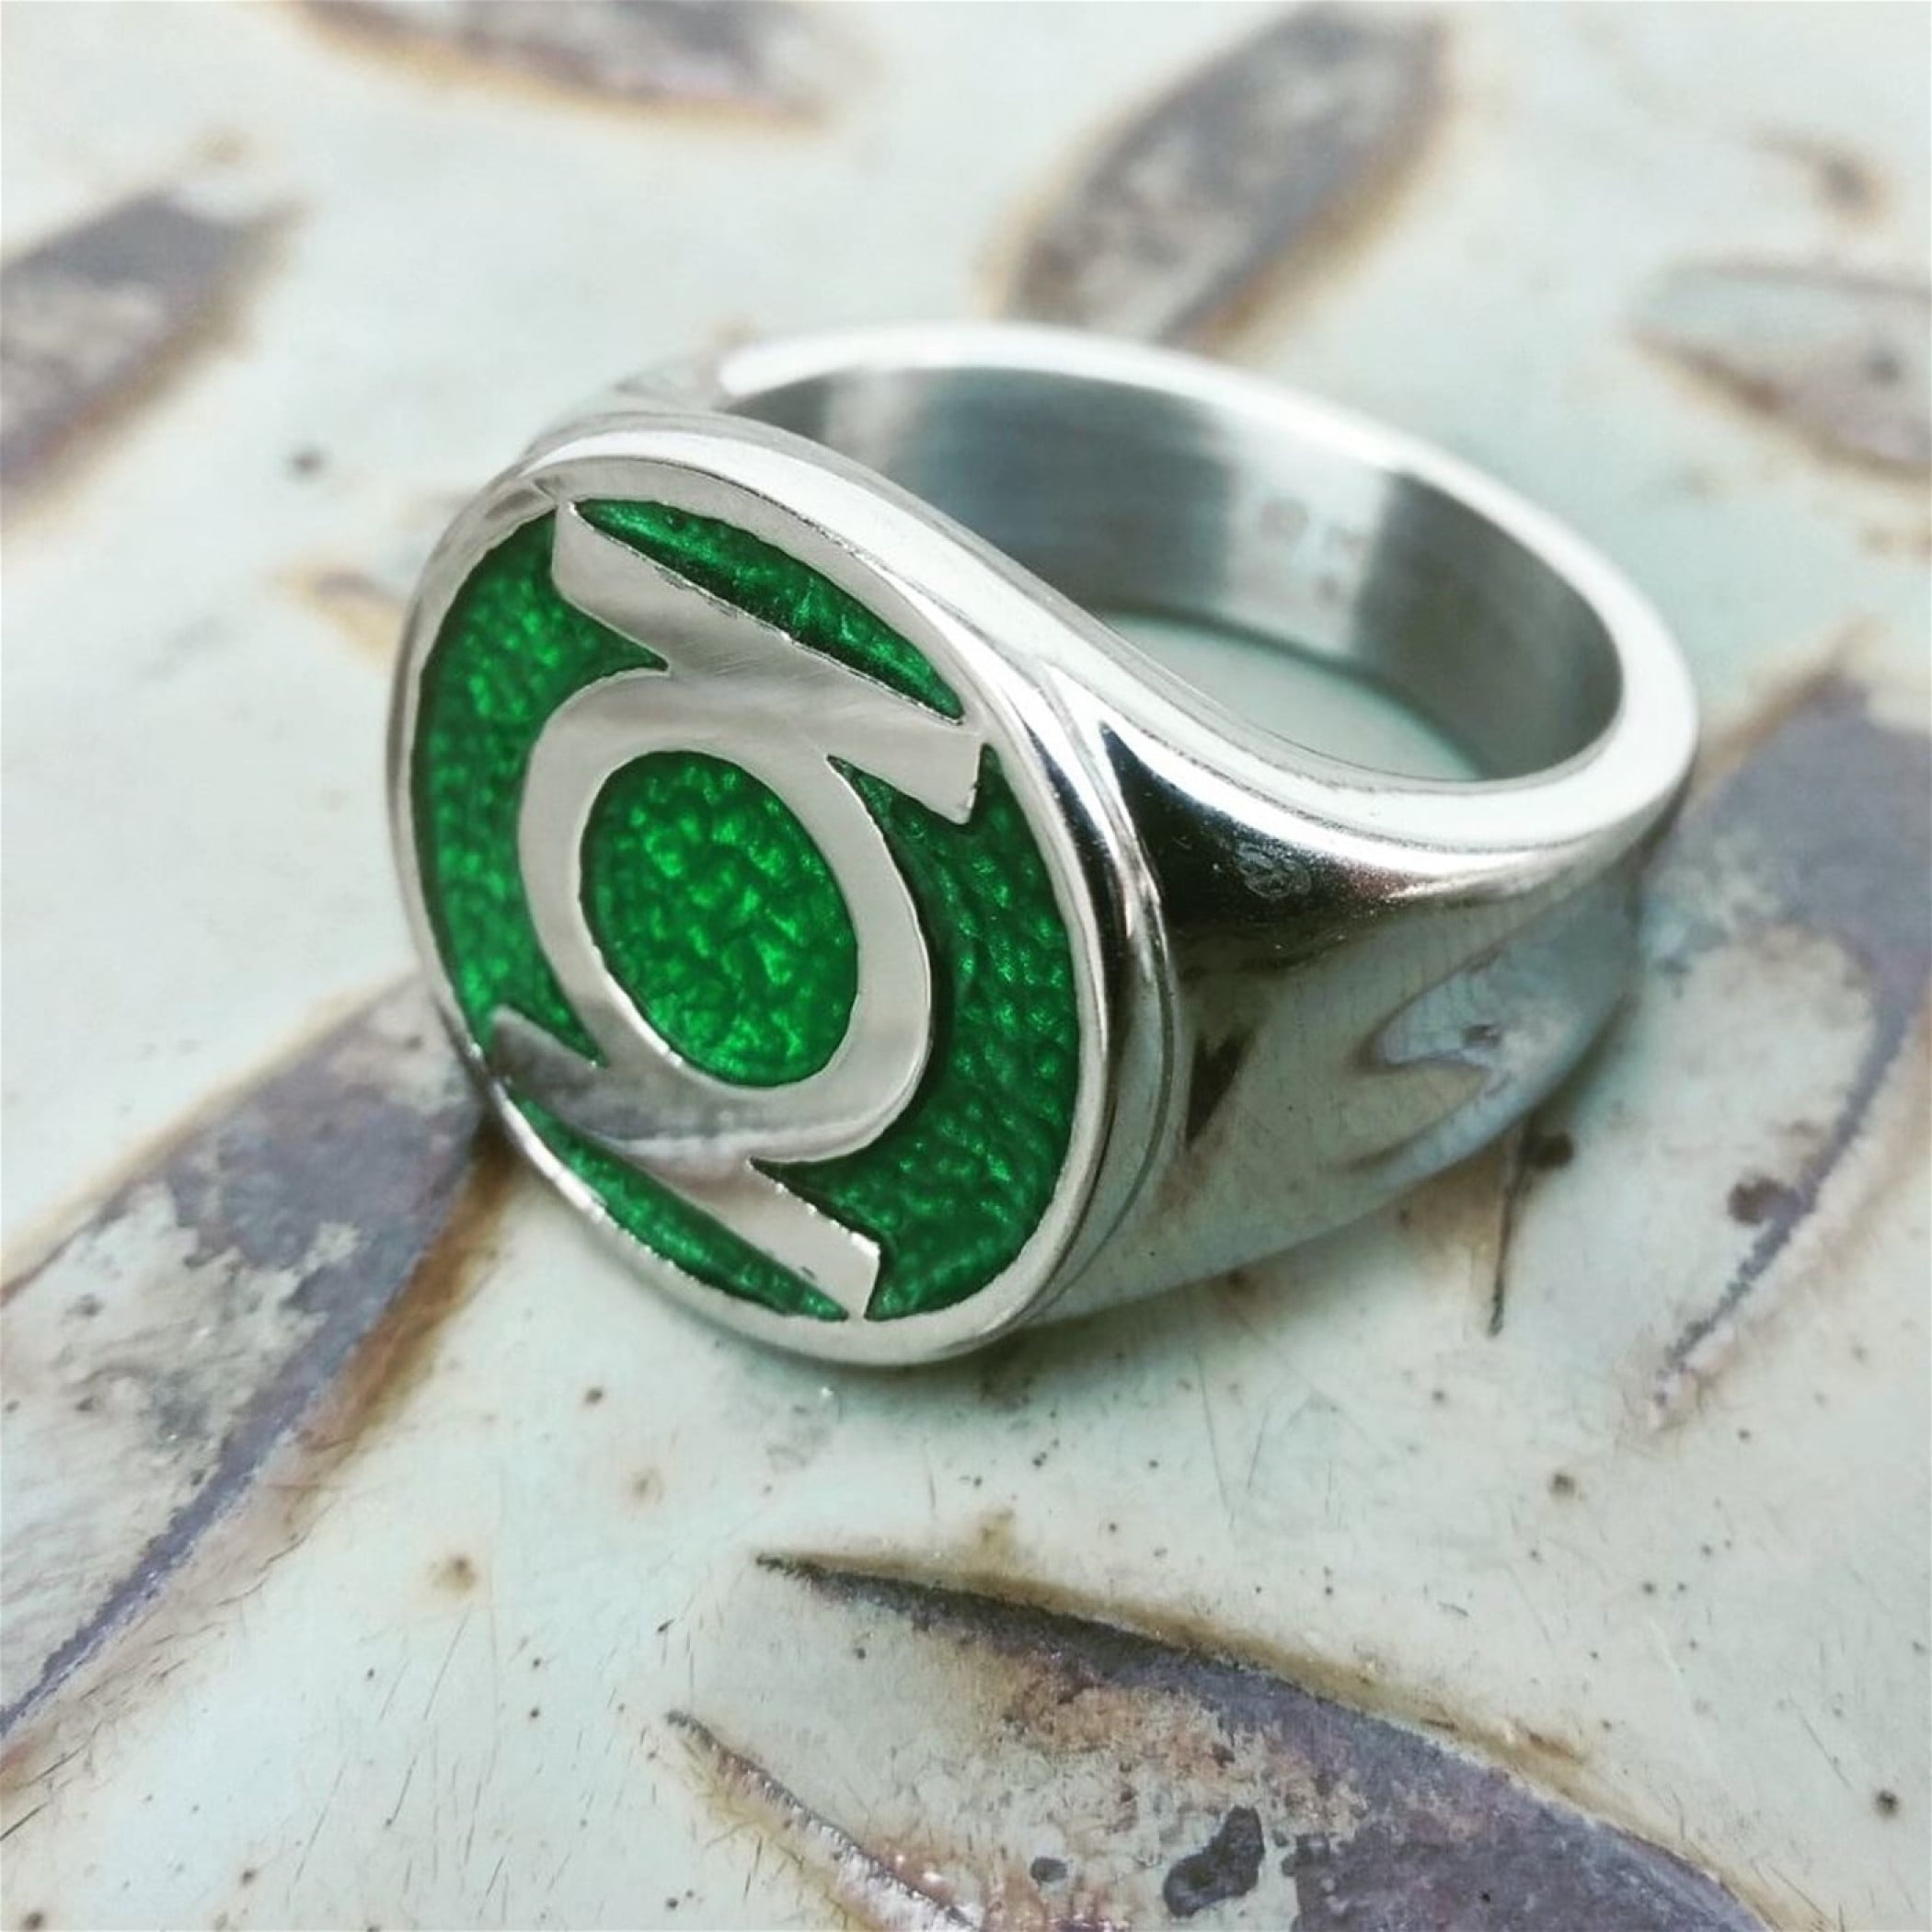 How To Make Green Lantern's Ring - YouTube